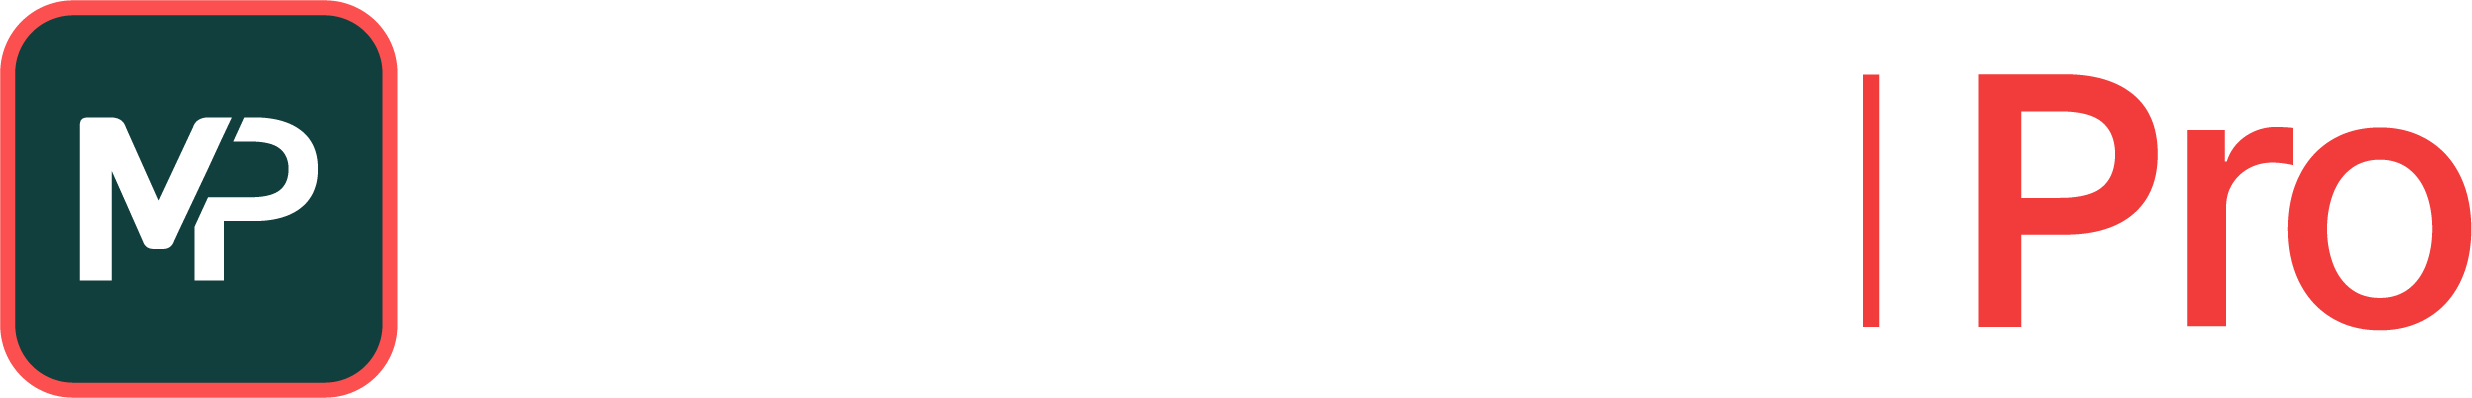 MEDIP Pro logo